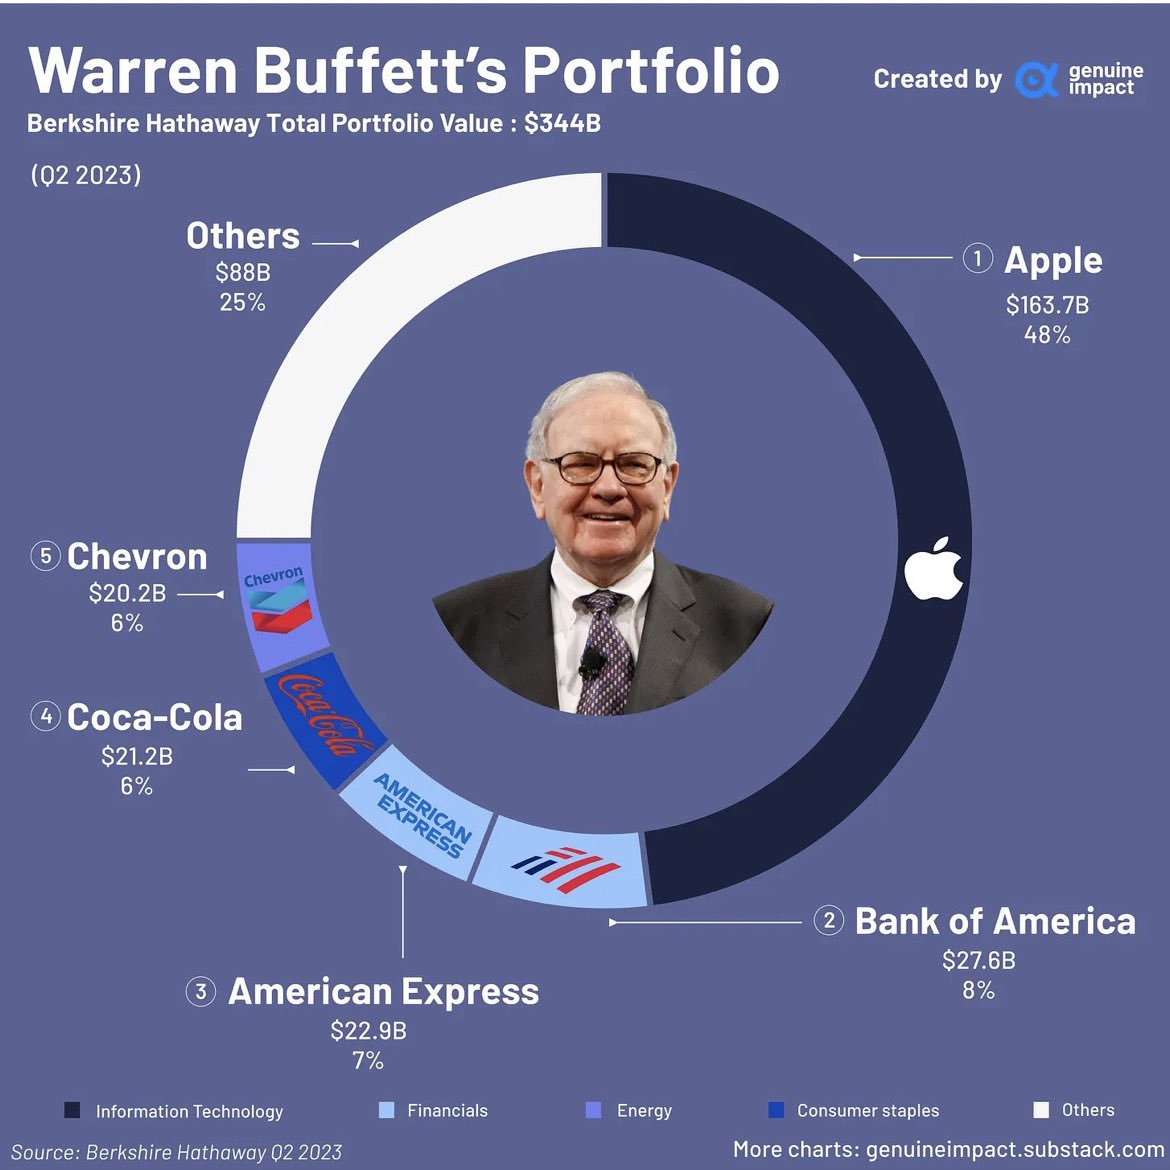 💰 Almost half of Warren Buffett’s portfolio is made up of 🍎Apple at 48%, and valued at $163.7B. 🏆The top 5 holdings account for over 75% of the total portfolio. 💰 ما يقرب من نصف محفظة وارن بافيت تتكون من شركة 🍎Apple بنسبة 48%، وتقدر قيمتها بـ 163.7 مليار دولار. 🏆تمثل أكبر